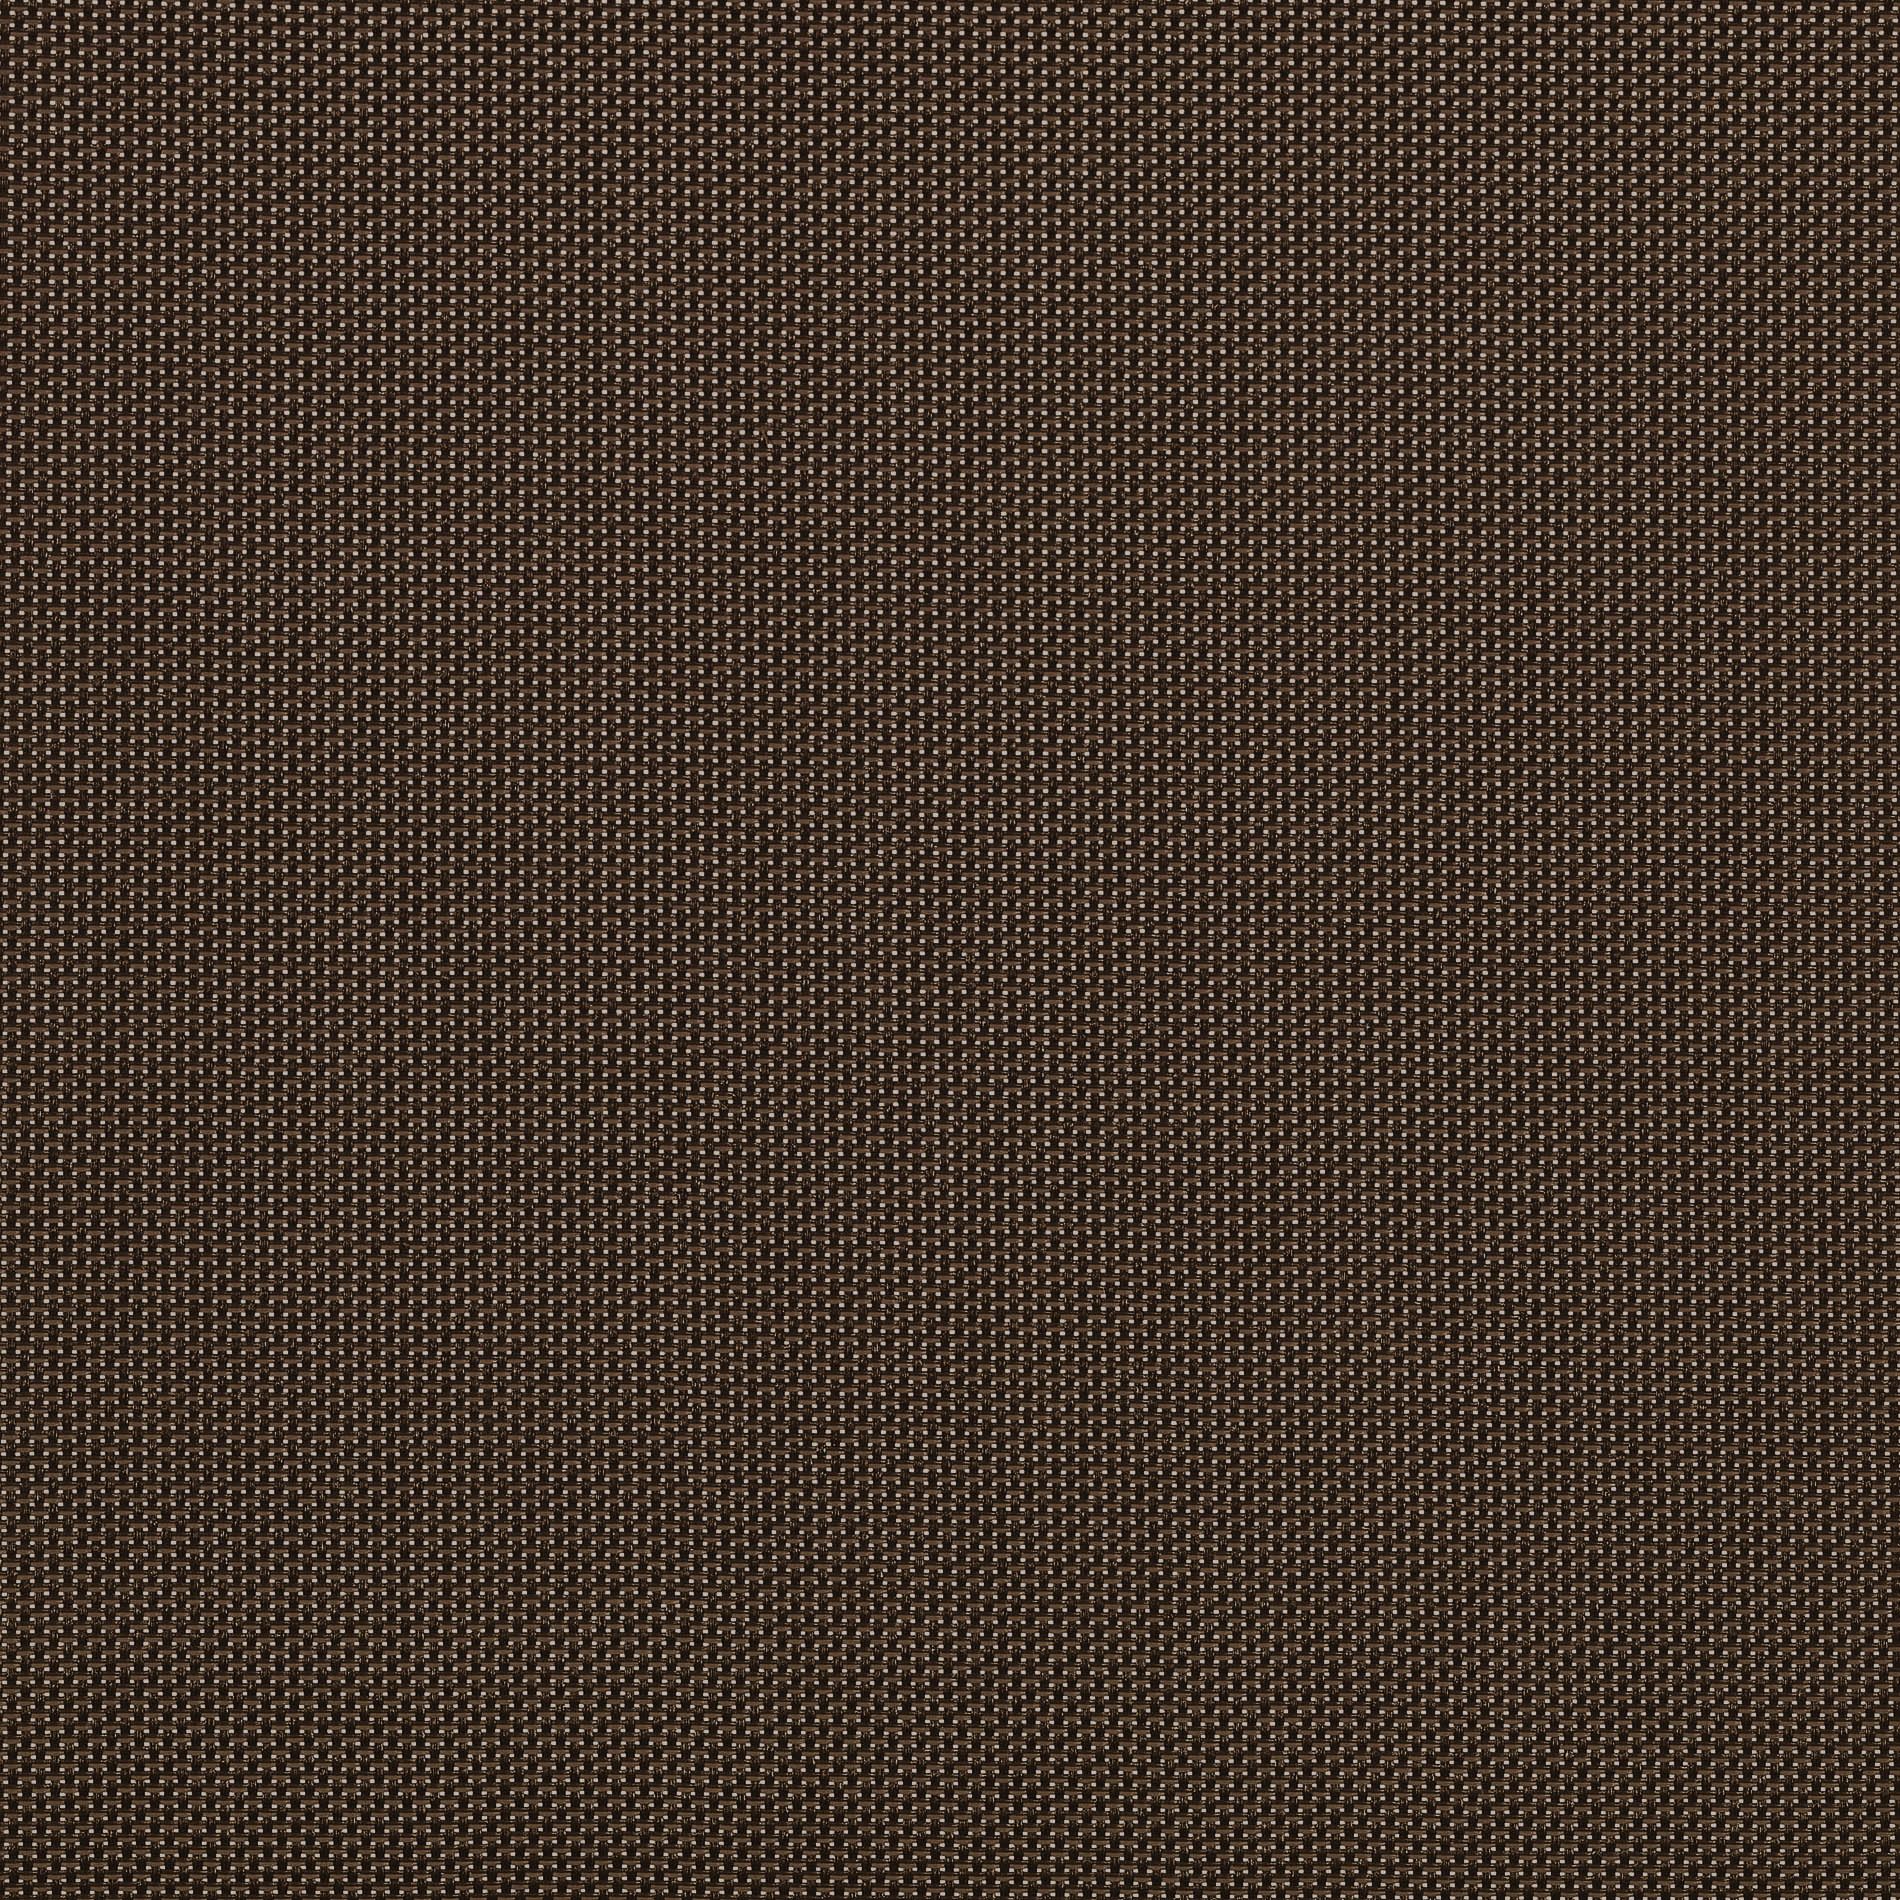 Altex - Fabric - NATTÉ 5% - Charcoal/Cocoa-Fawn - 30M687_TEMP_2